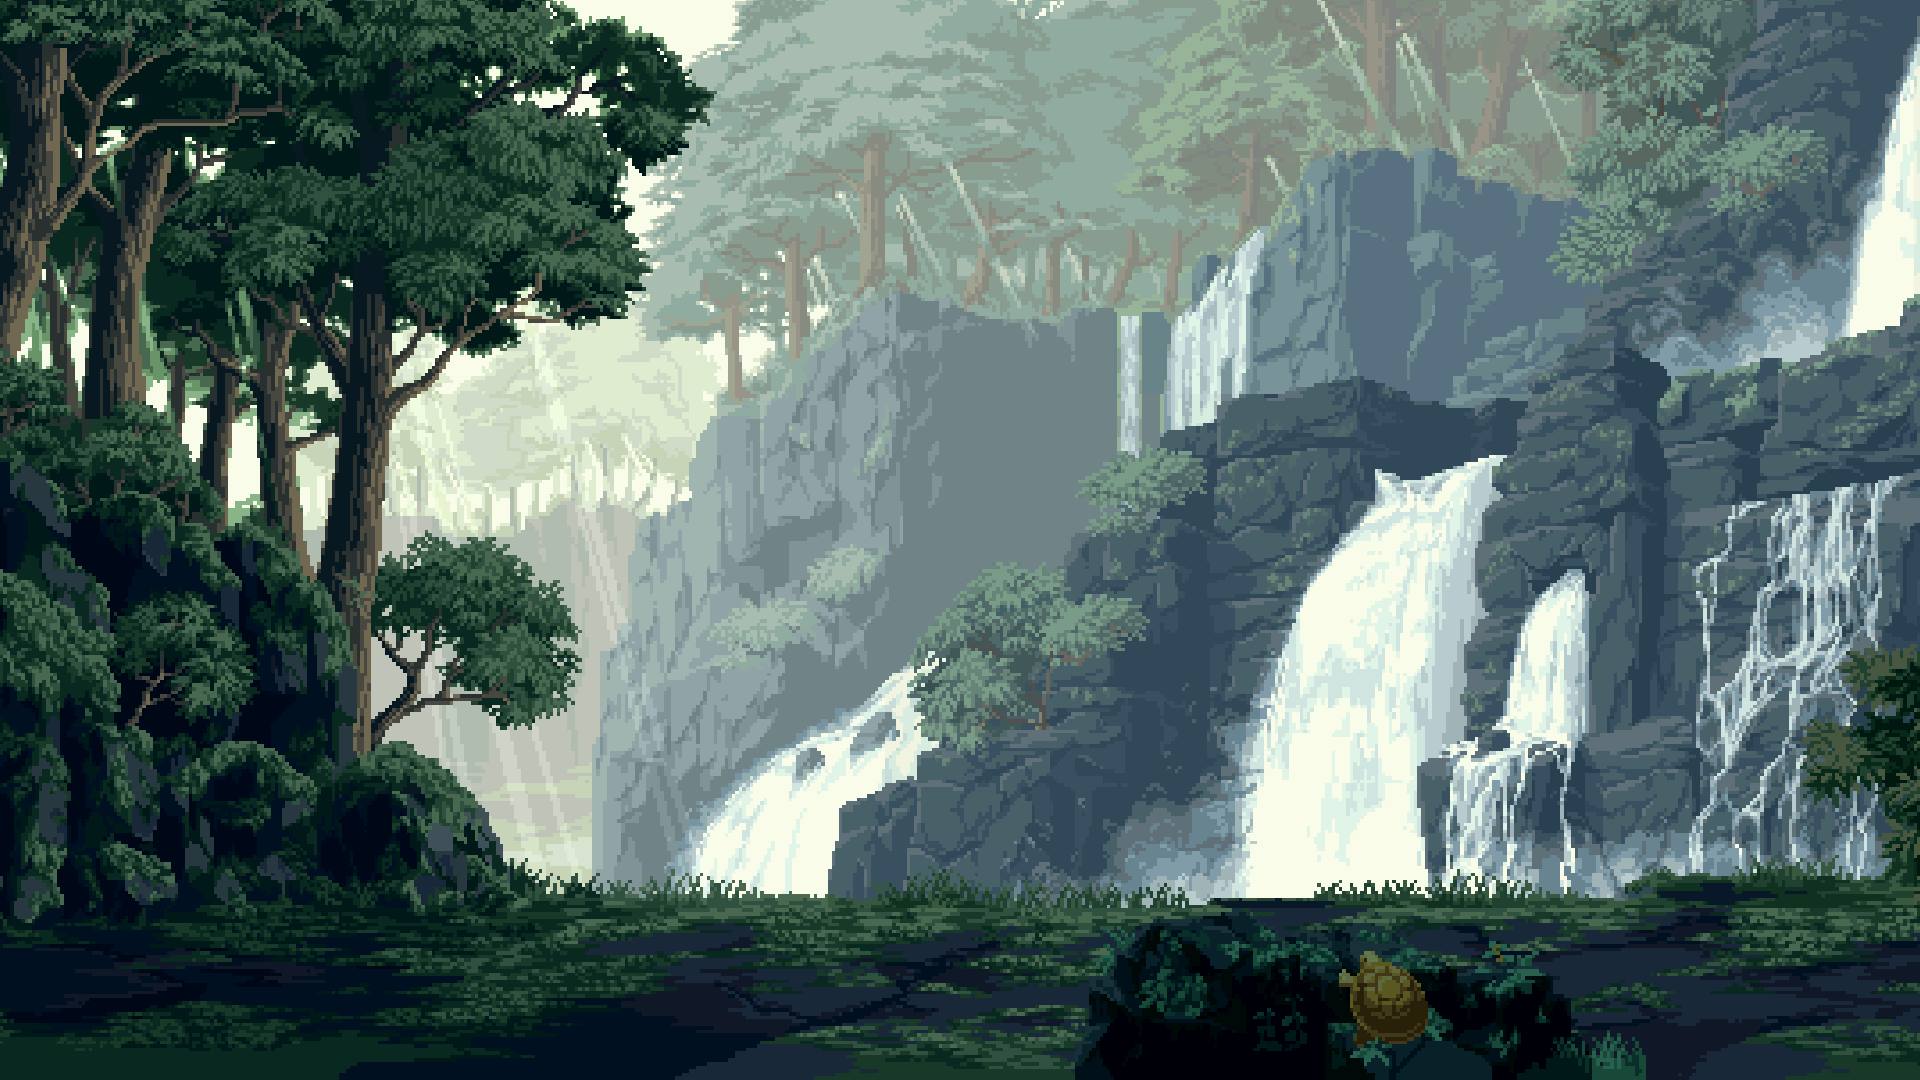 Digital Art Pixel Art Pixelated Pixels Nature Landscape Waterfall Trees Rock Turtle Forest Landscape 1920x1080